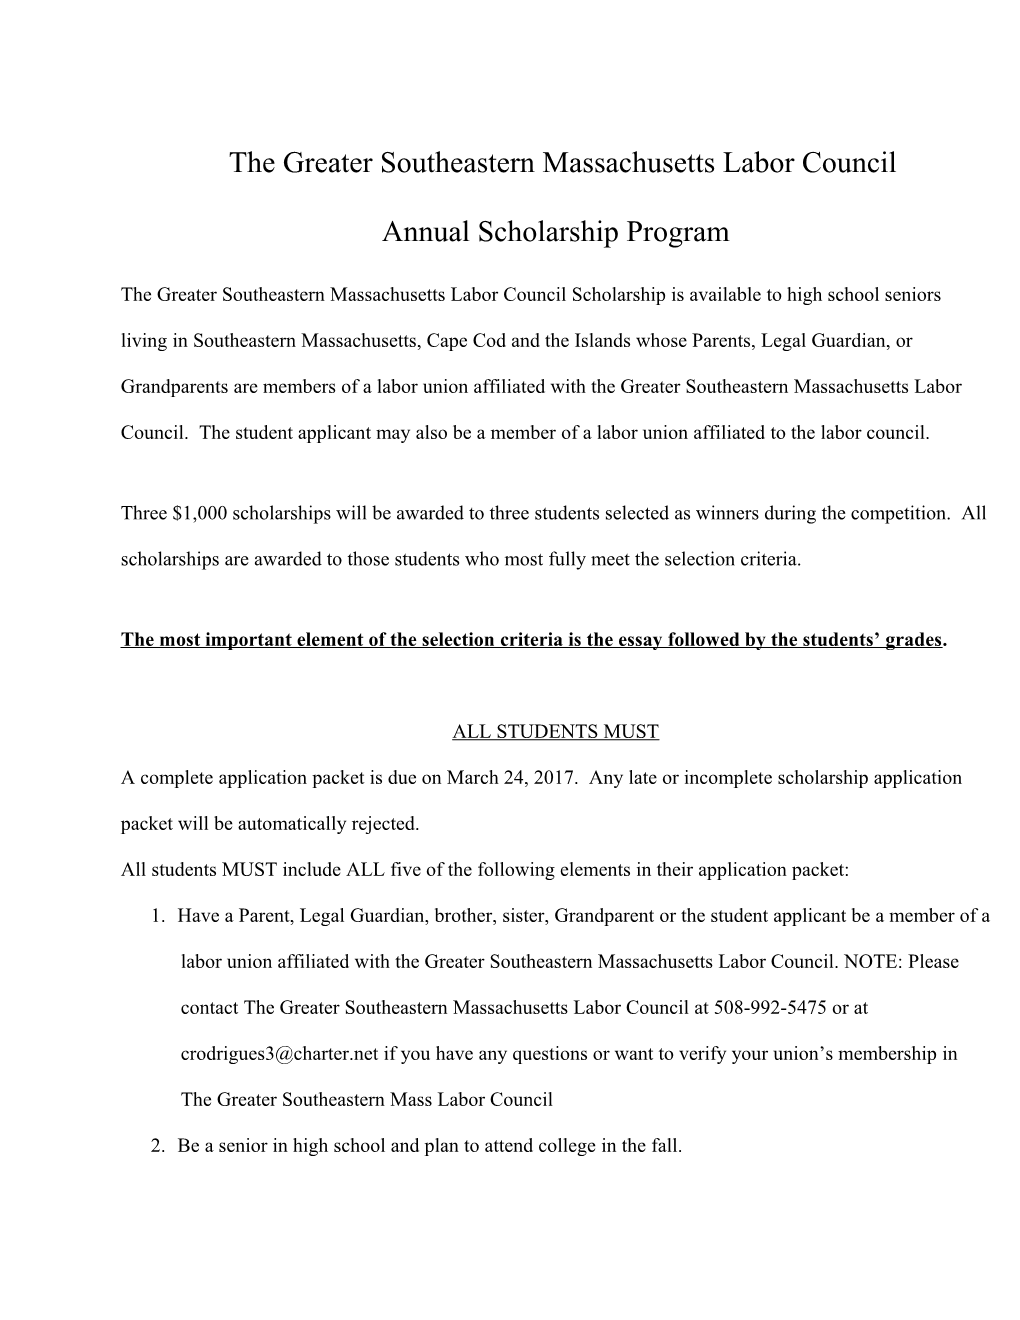 The Greater Southeastern Massachusetts Labor Council Annual Scholarship Program